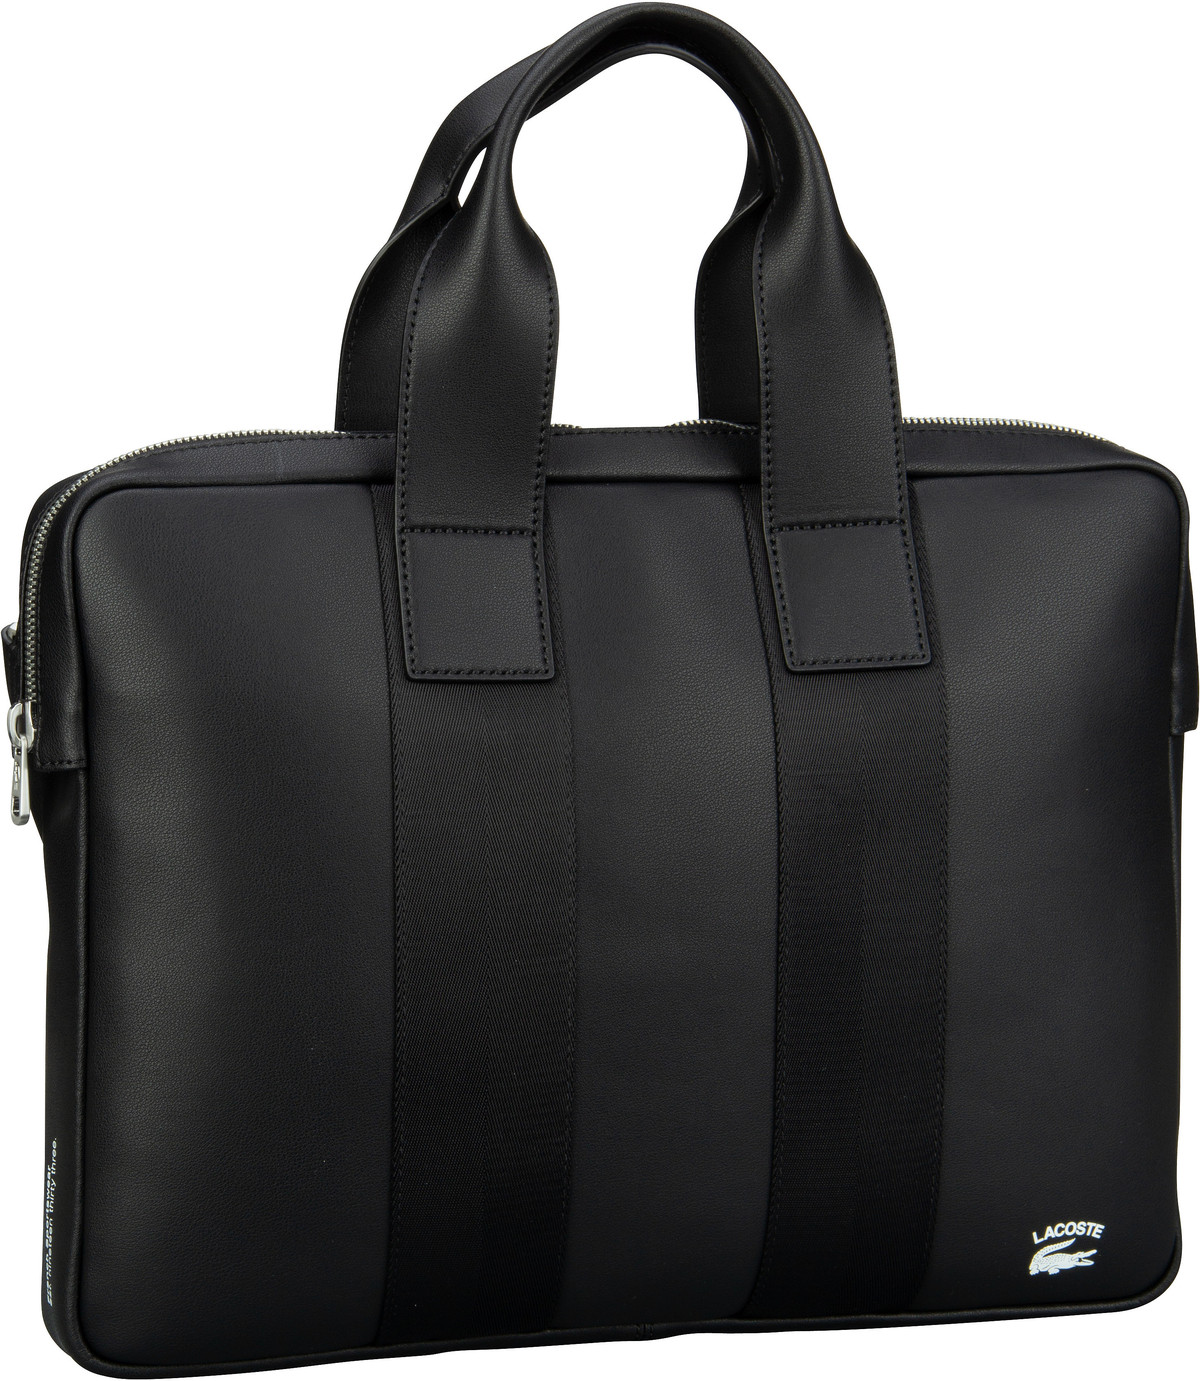 Lacoste Practice Computer Bag 4019 - Black